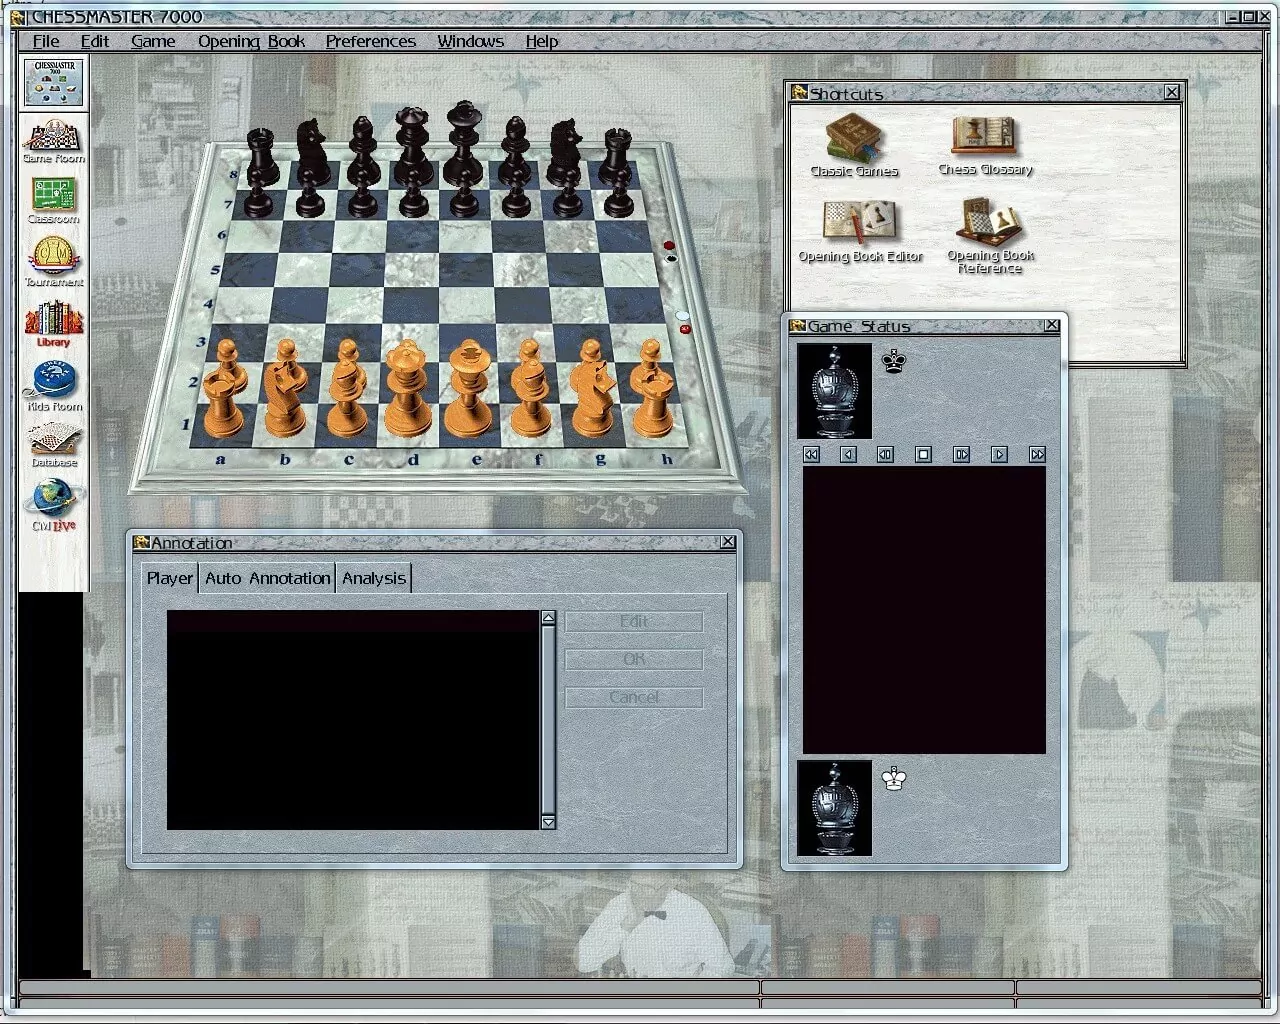 Chessmaster: Grandmaster Edition Images - LaunchBox Games Database